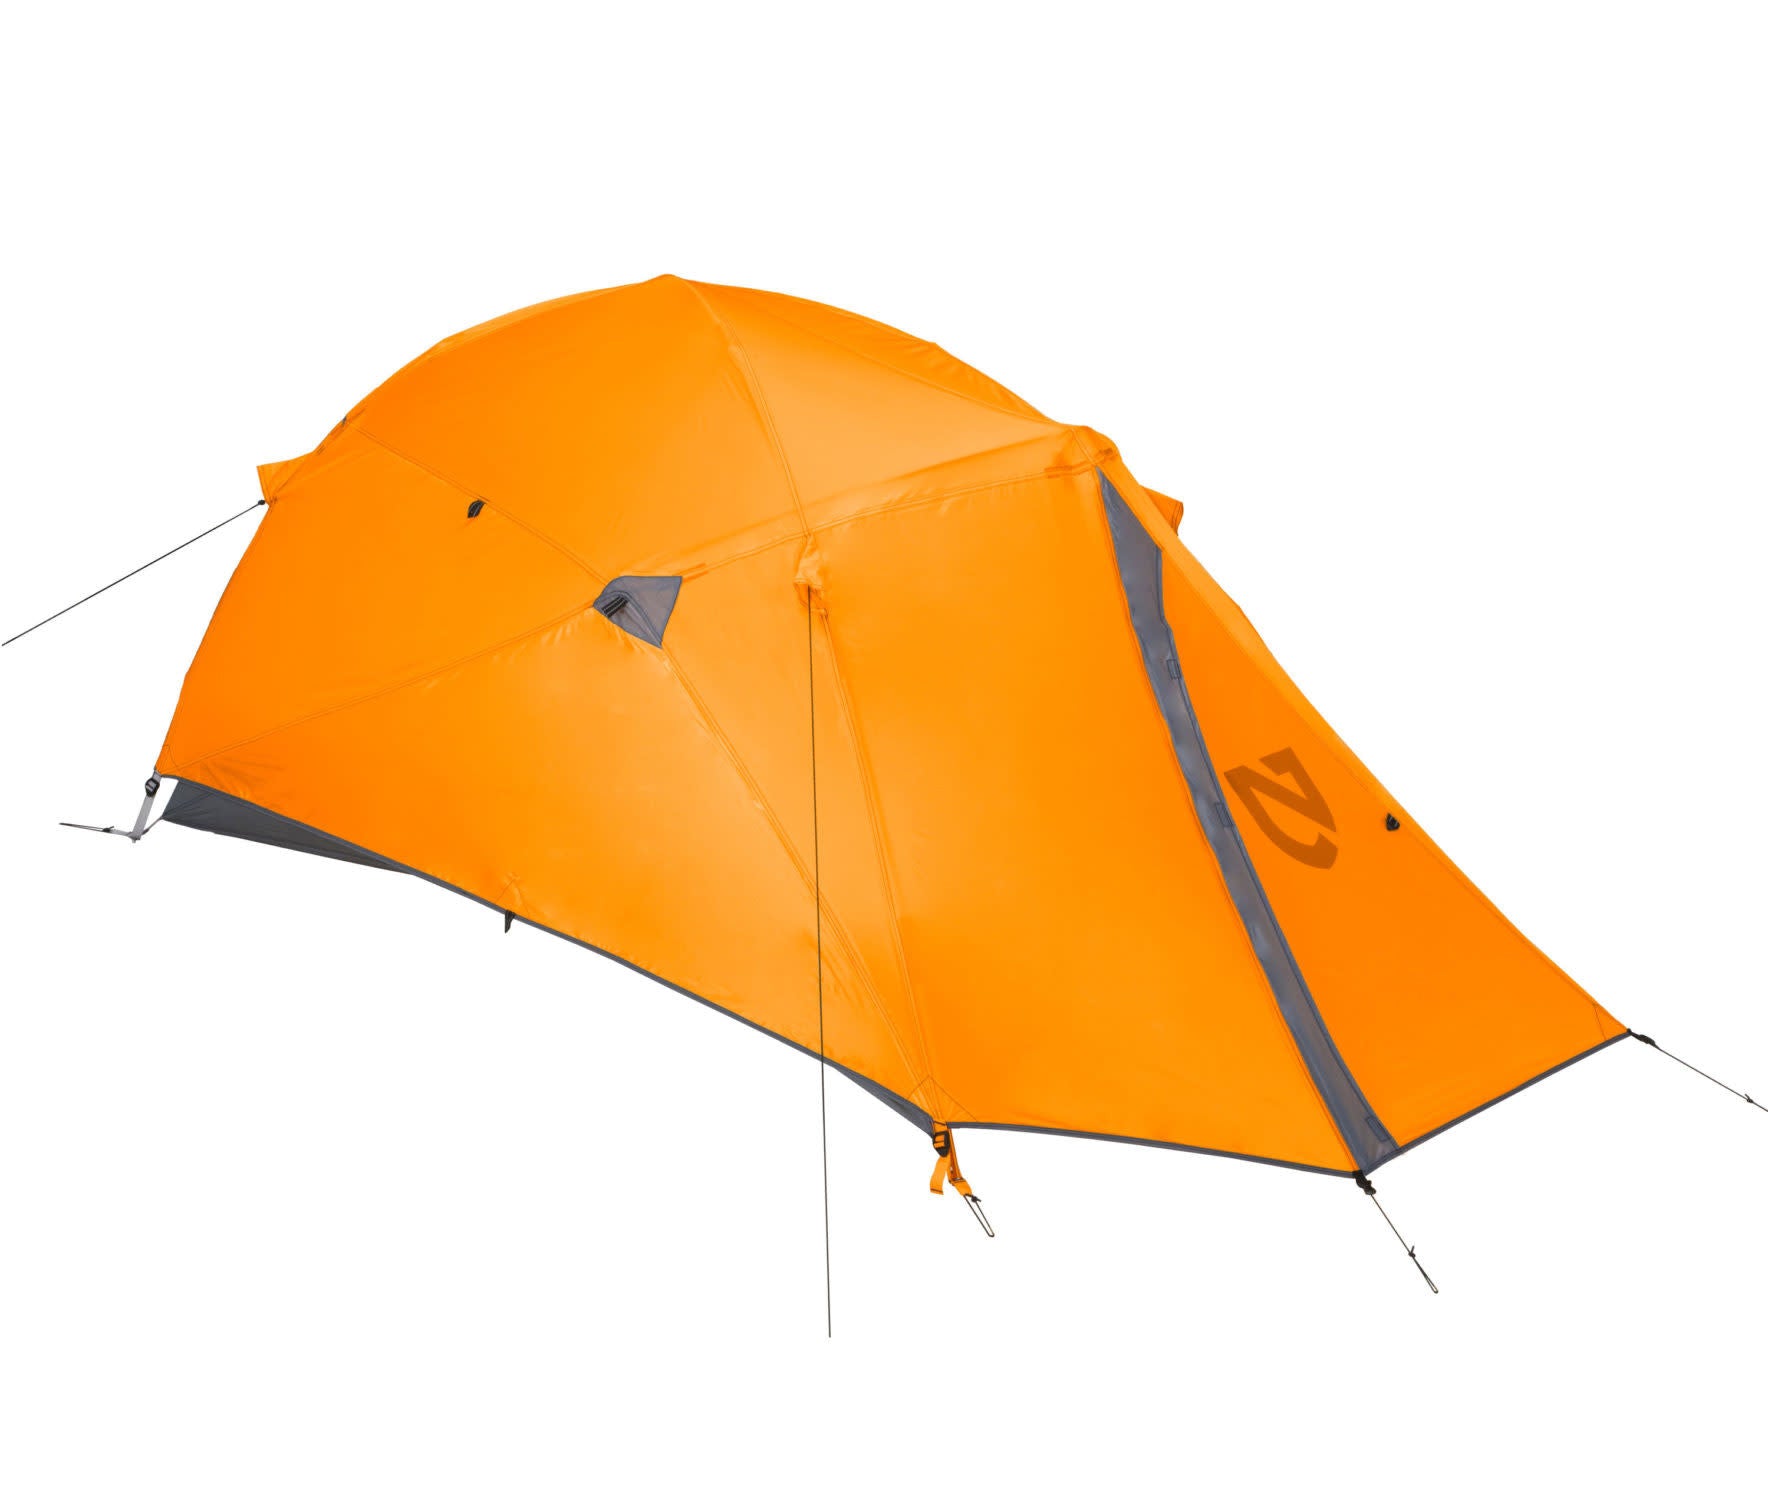 Nemo - Kunai 2P 4 Season Backpacking Tent